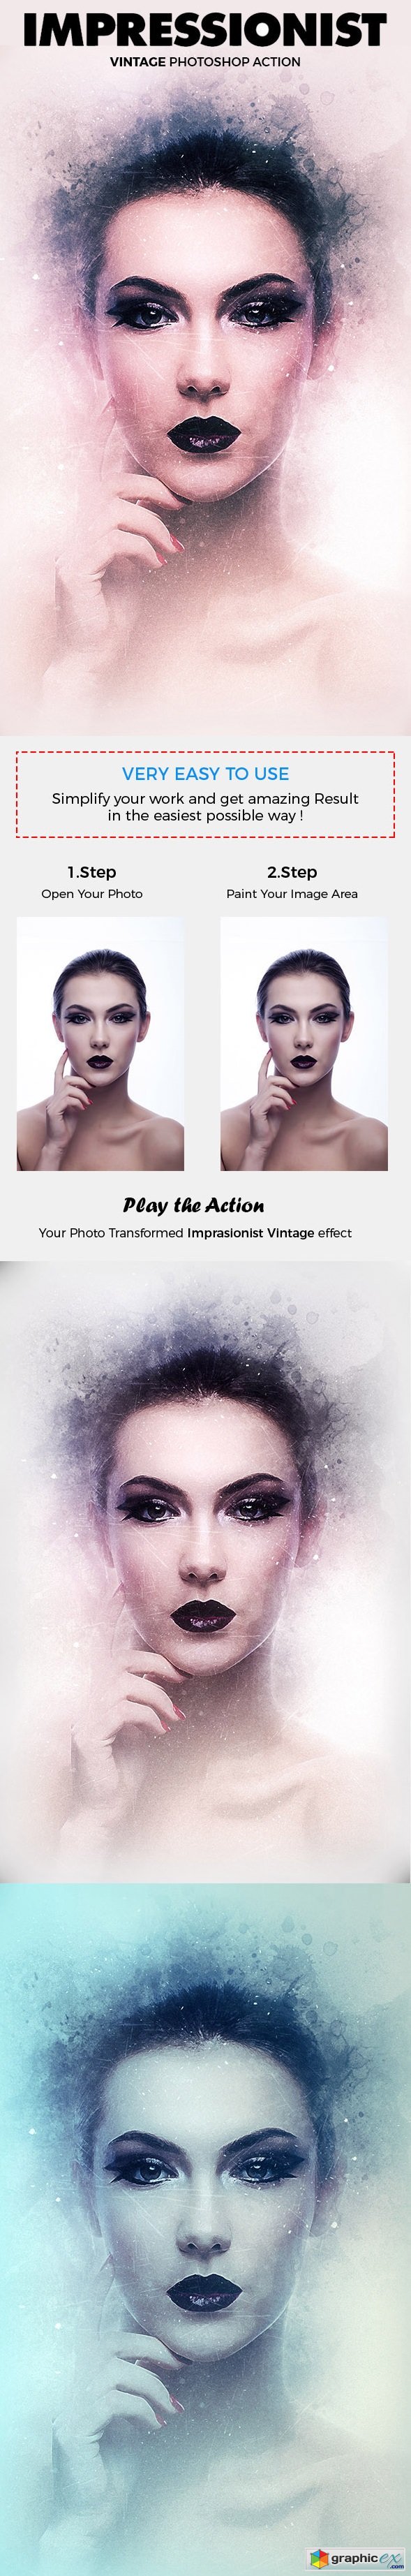 impressionist photoshop action download